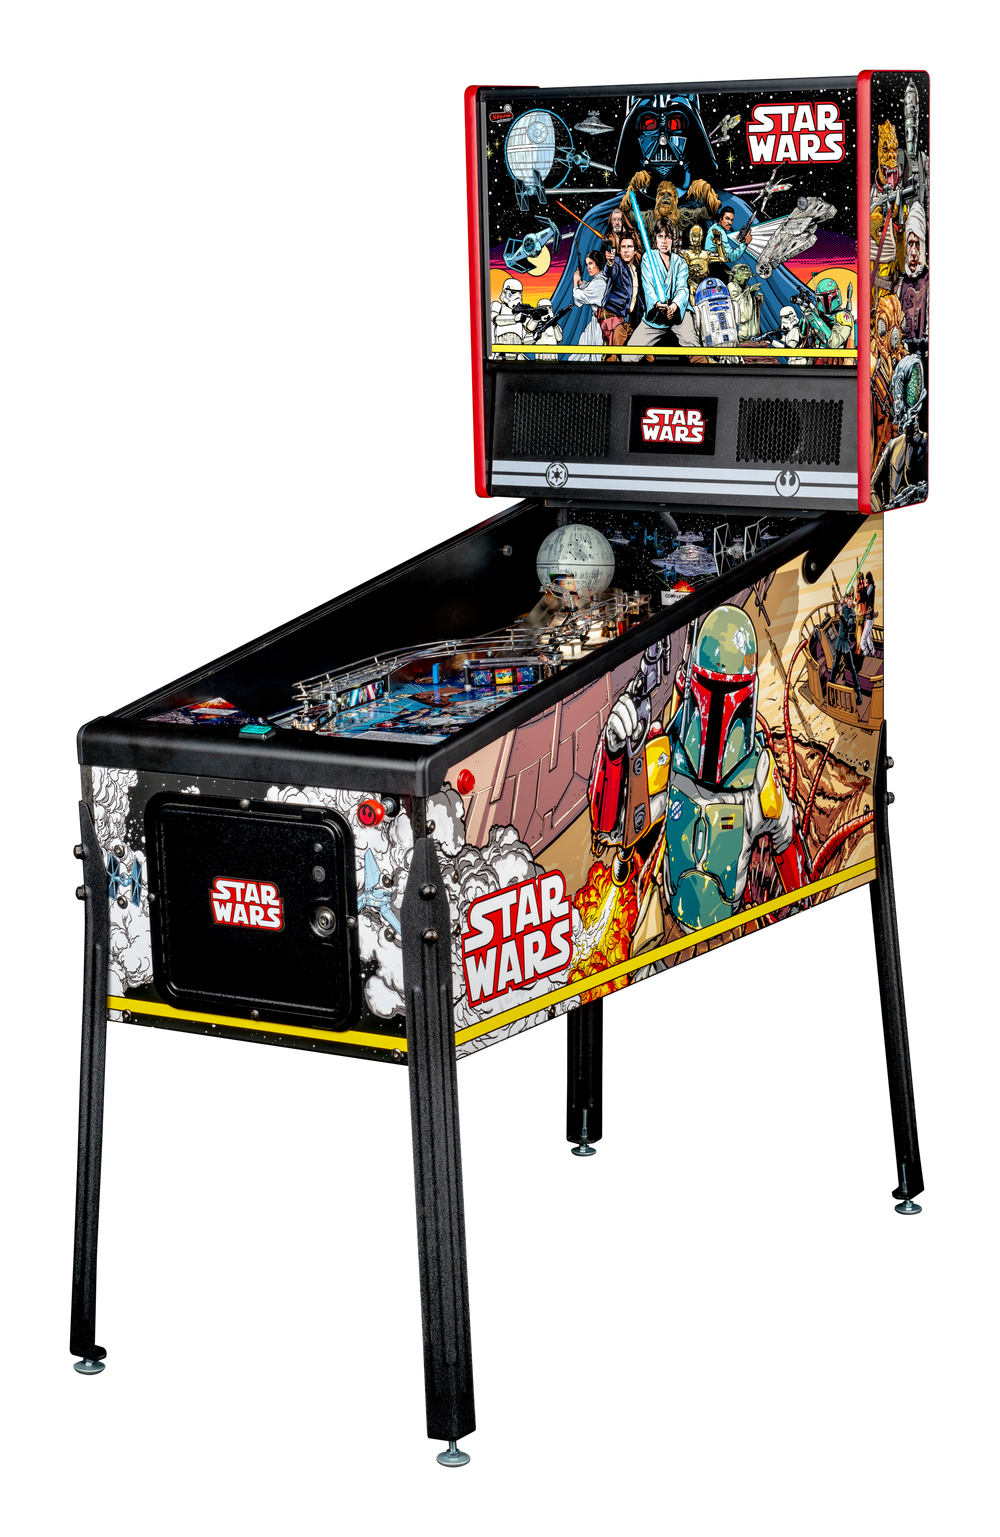 Star Wars Comic Art Home Pin Pinball Machine by Stern